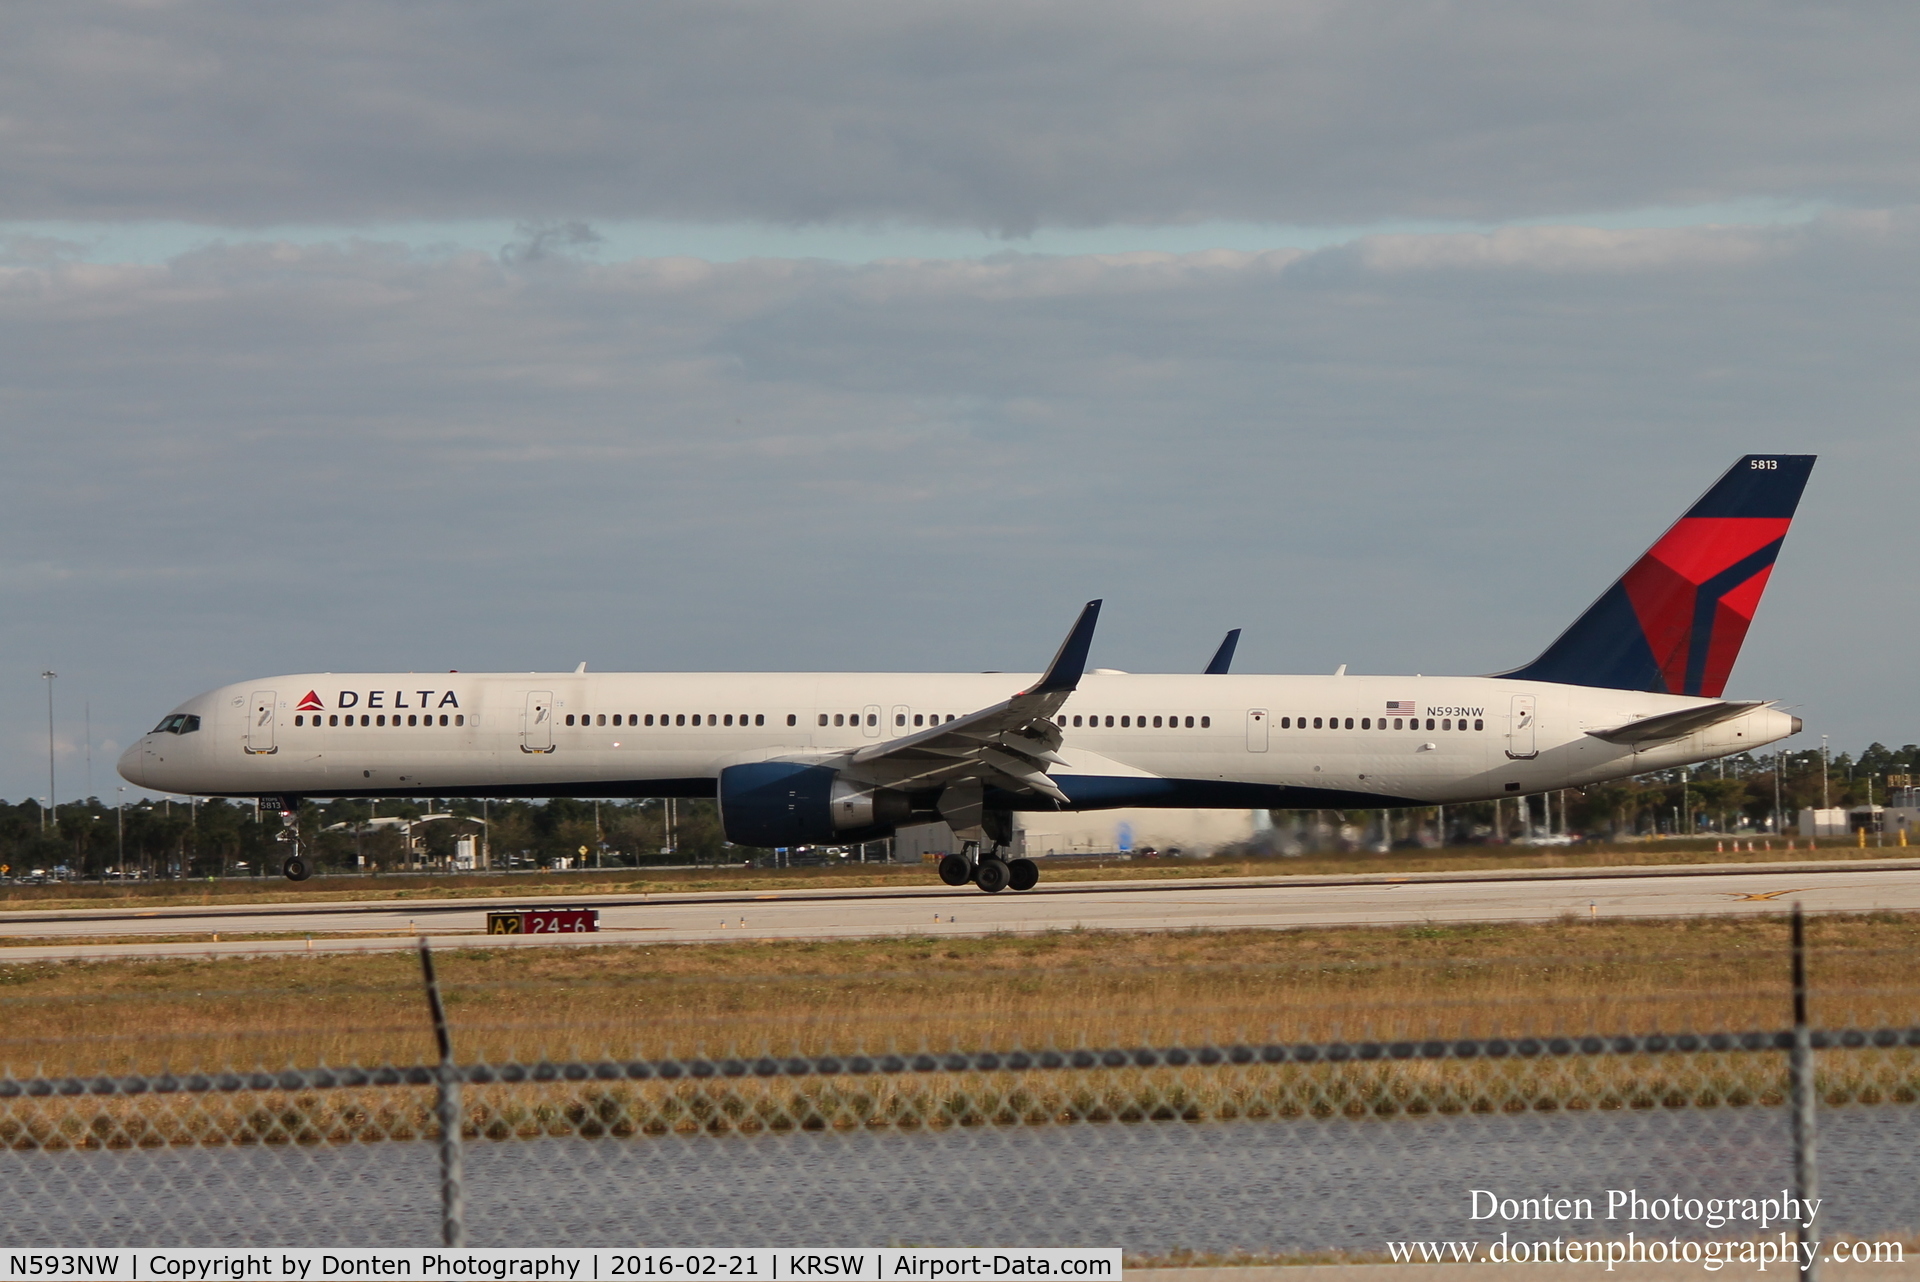 N593NW, 2003 Boeing 757-351 C/N 32993, Delta Flight 1147 (N593NW) arrives at Southwest Florida International Airport following flight from Minneapolis-St Paul International Airport